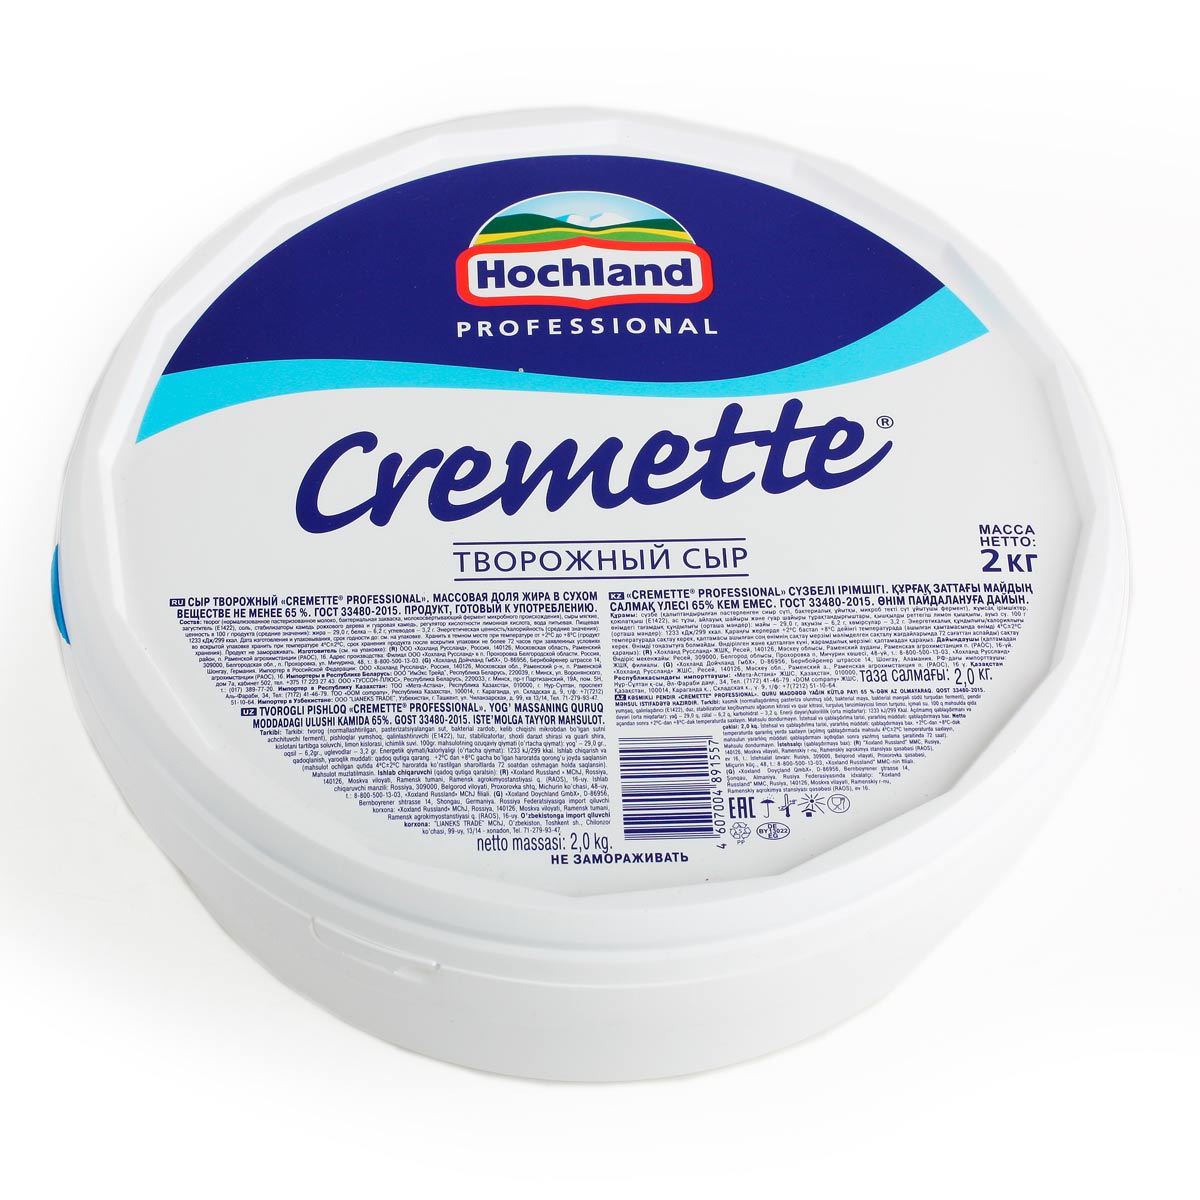 Сыр творожный Hochland Cremette professional, 2кг